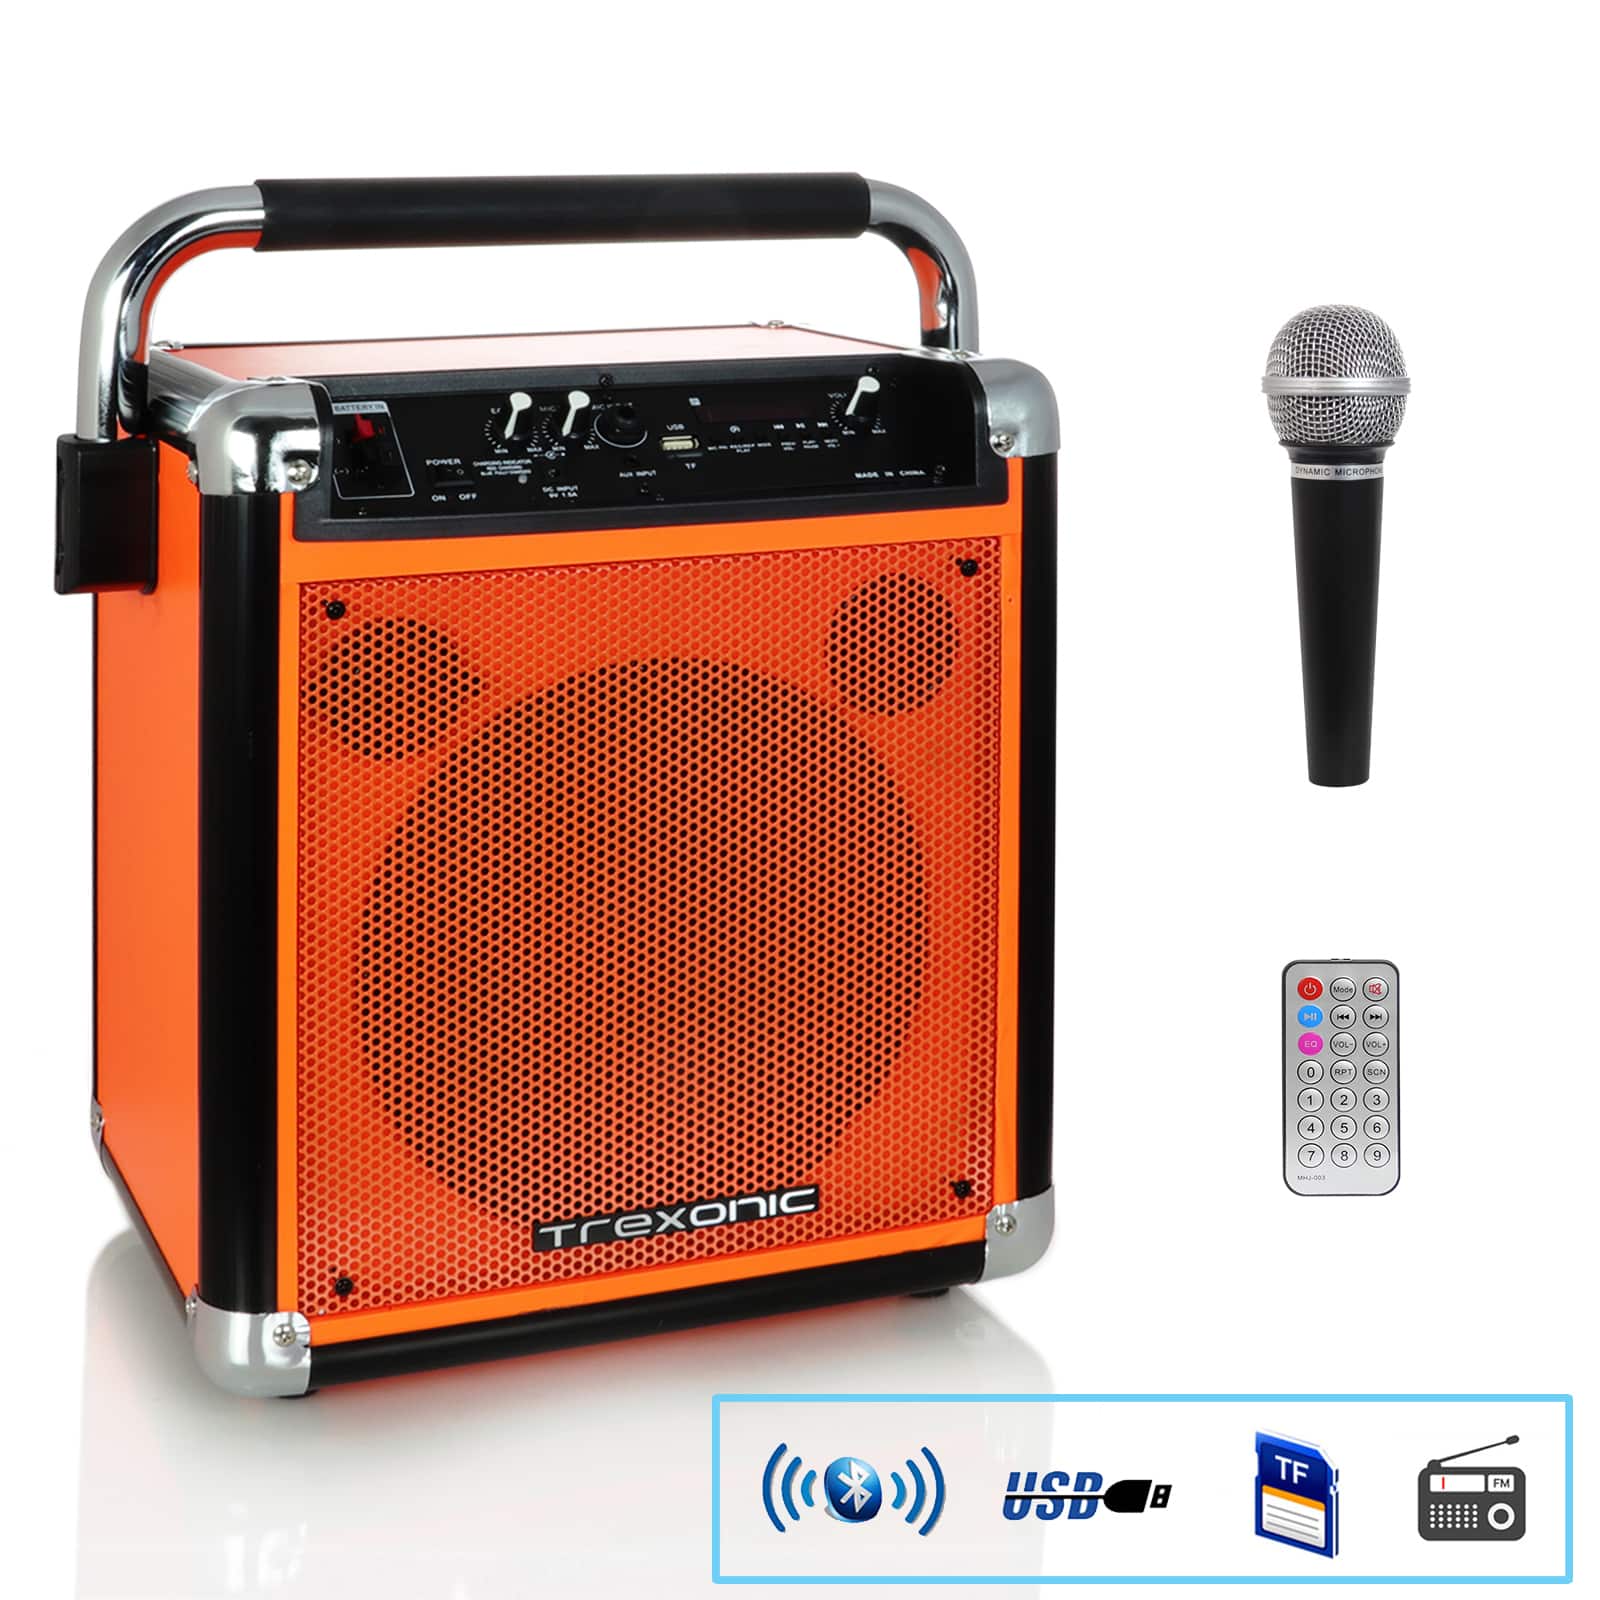 Trexonic Orange Wireless Portable Party Speaker With USB Recording